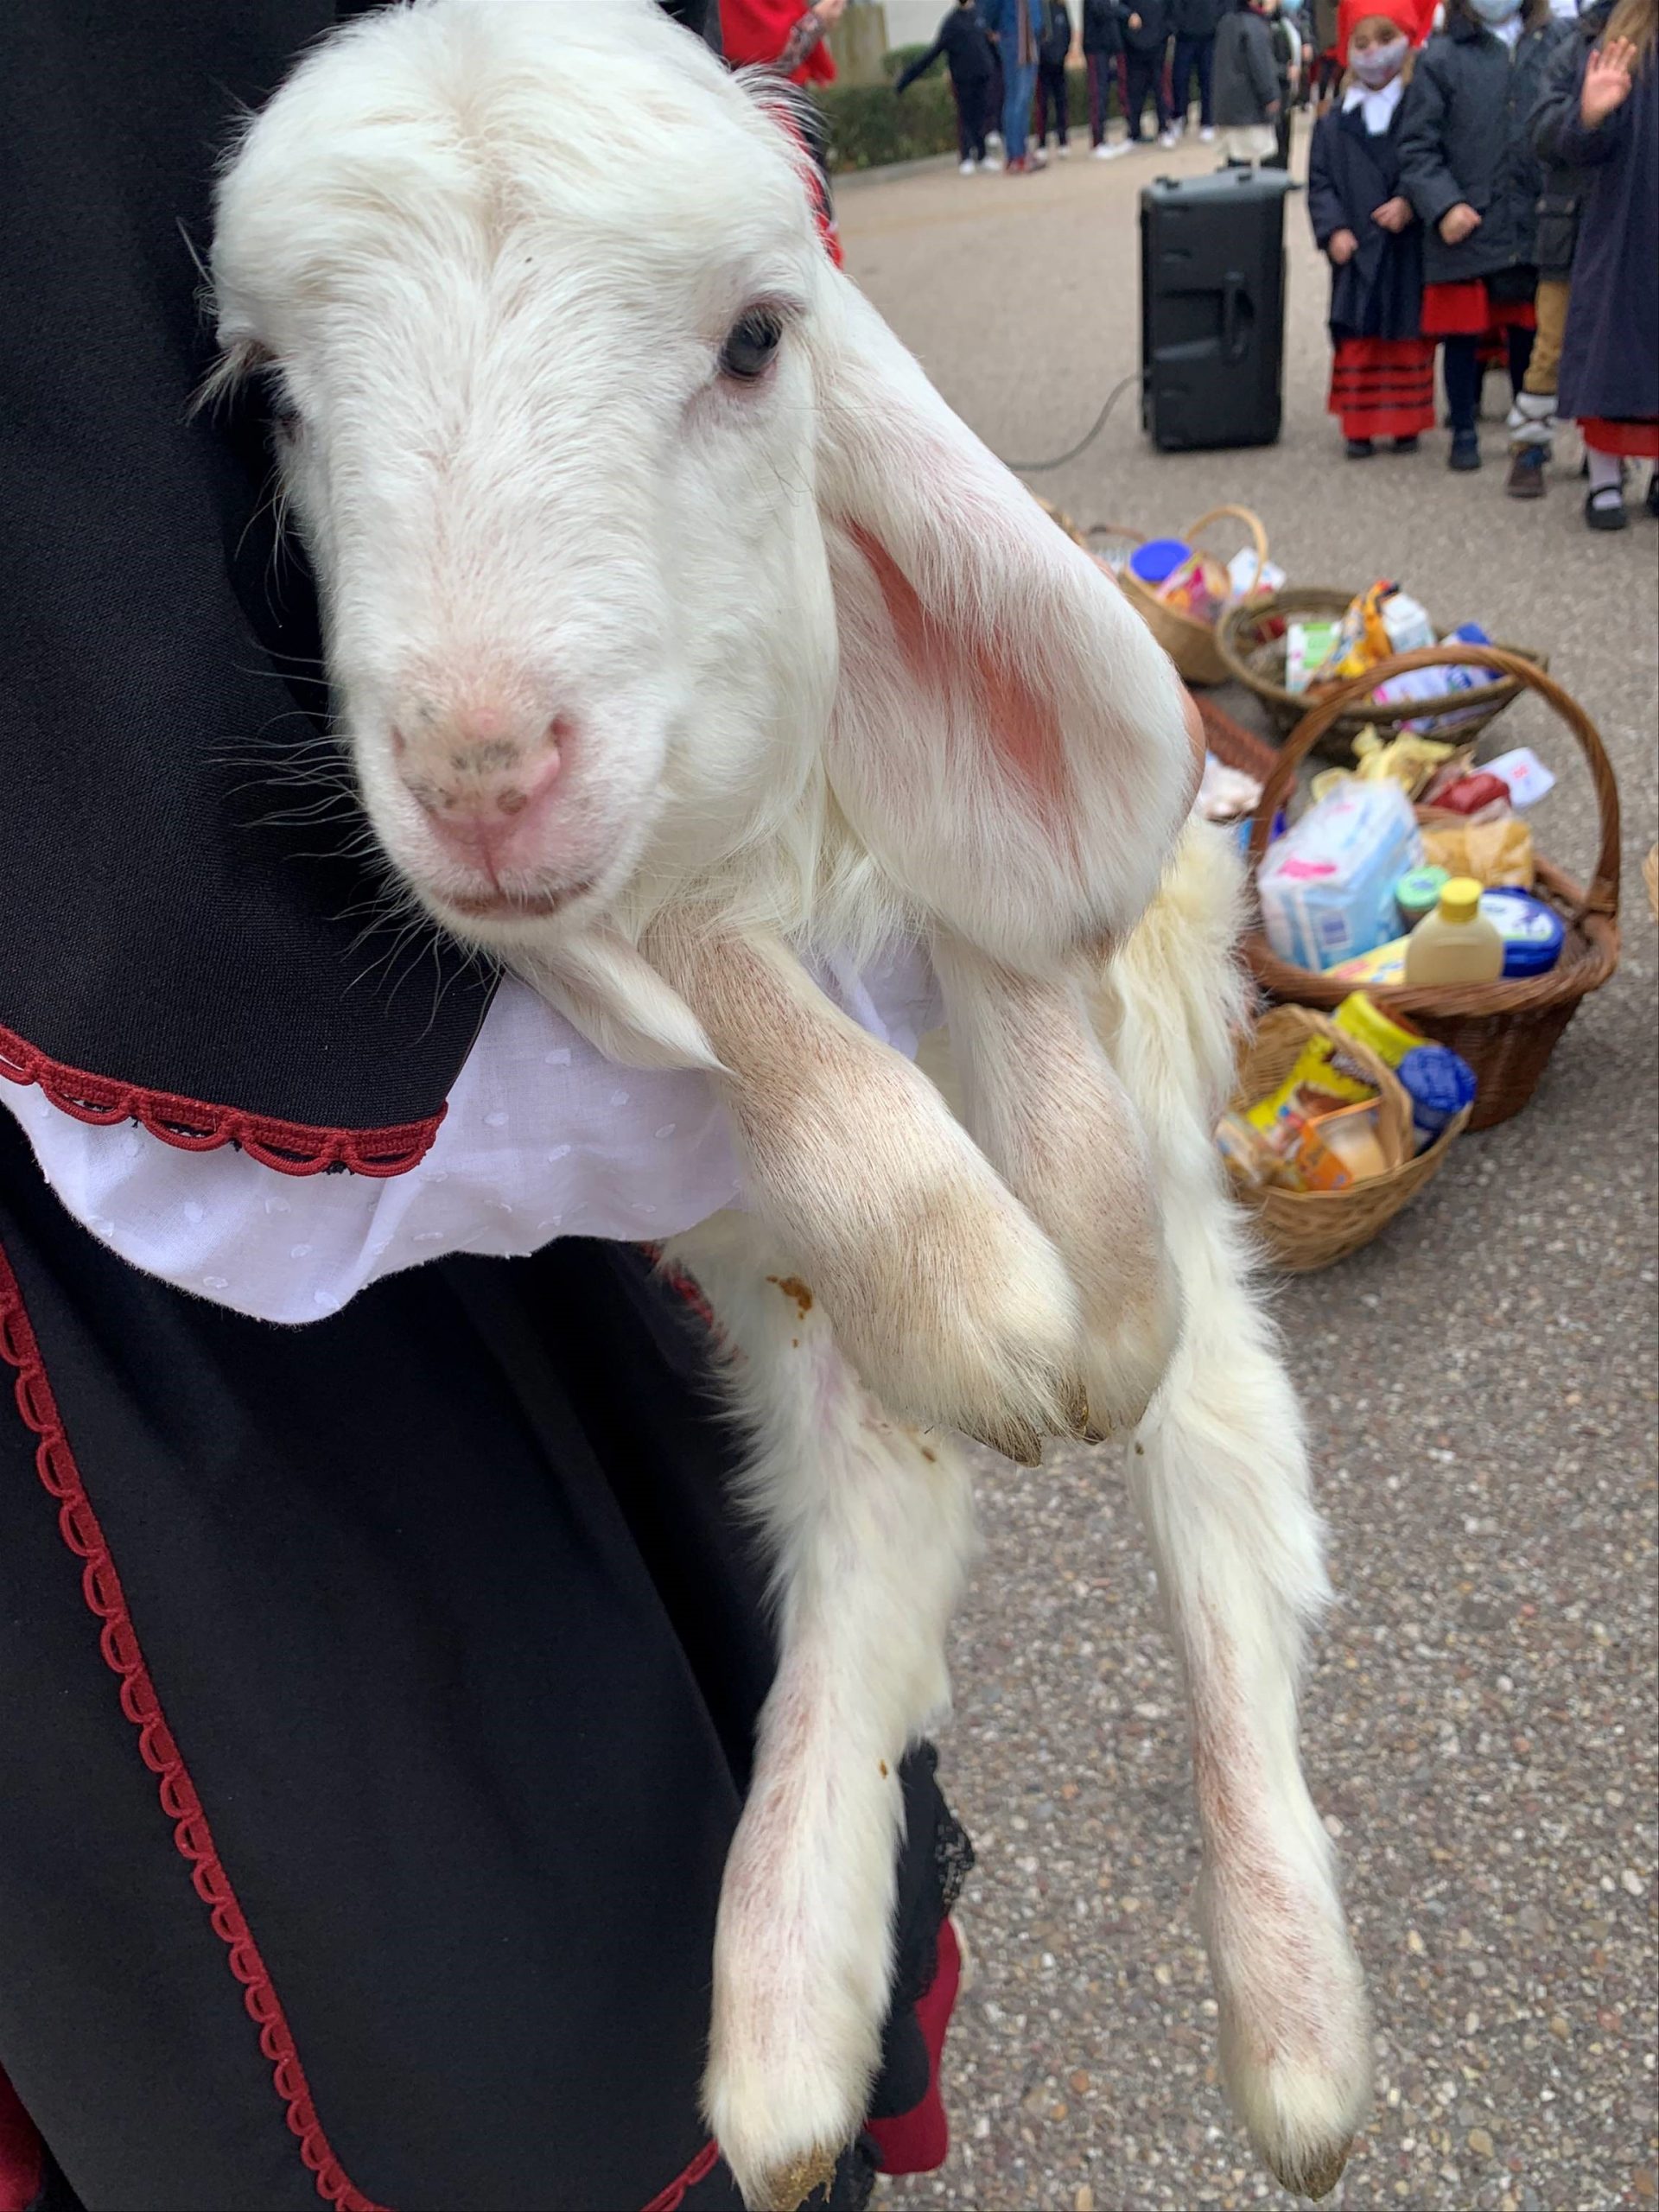 Lamb in Spanish school for Christmas celebration